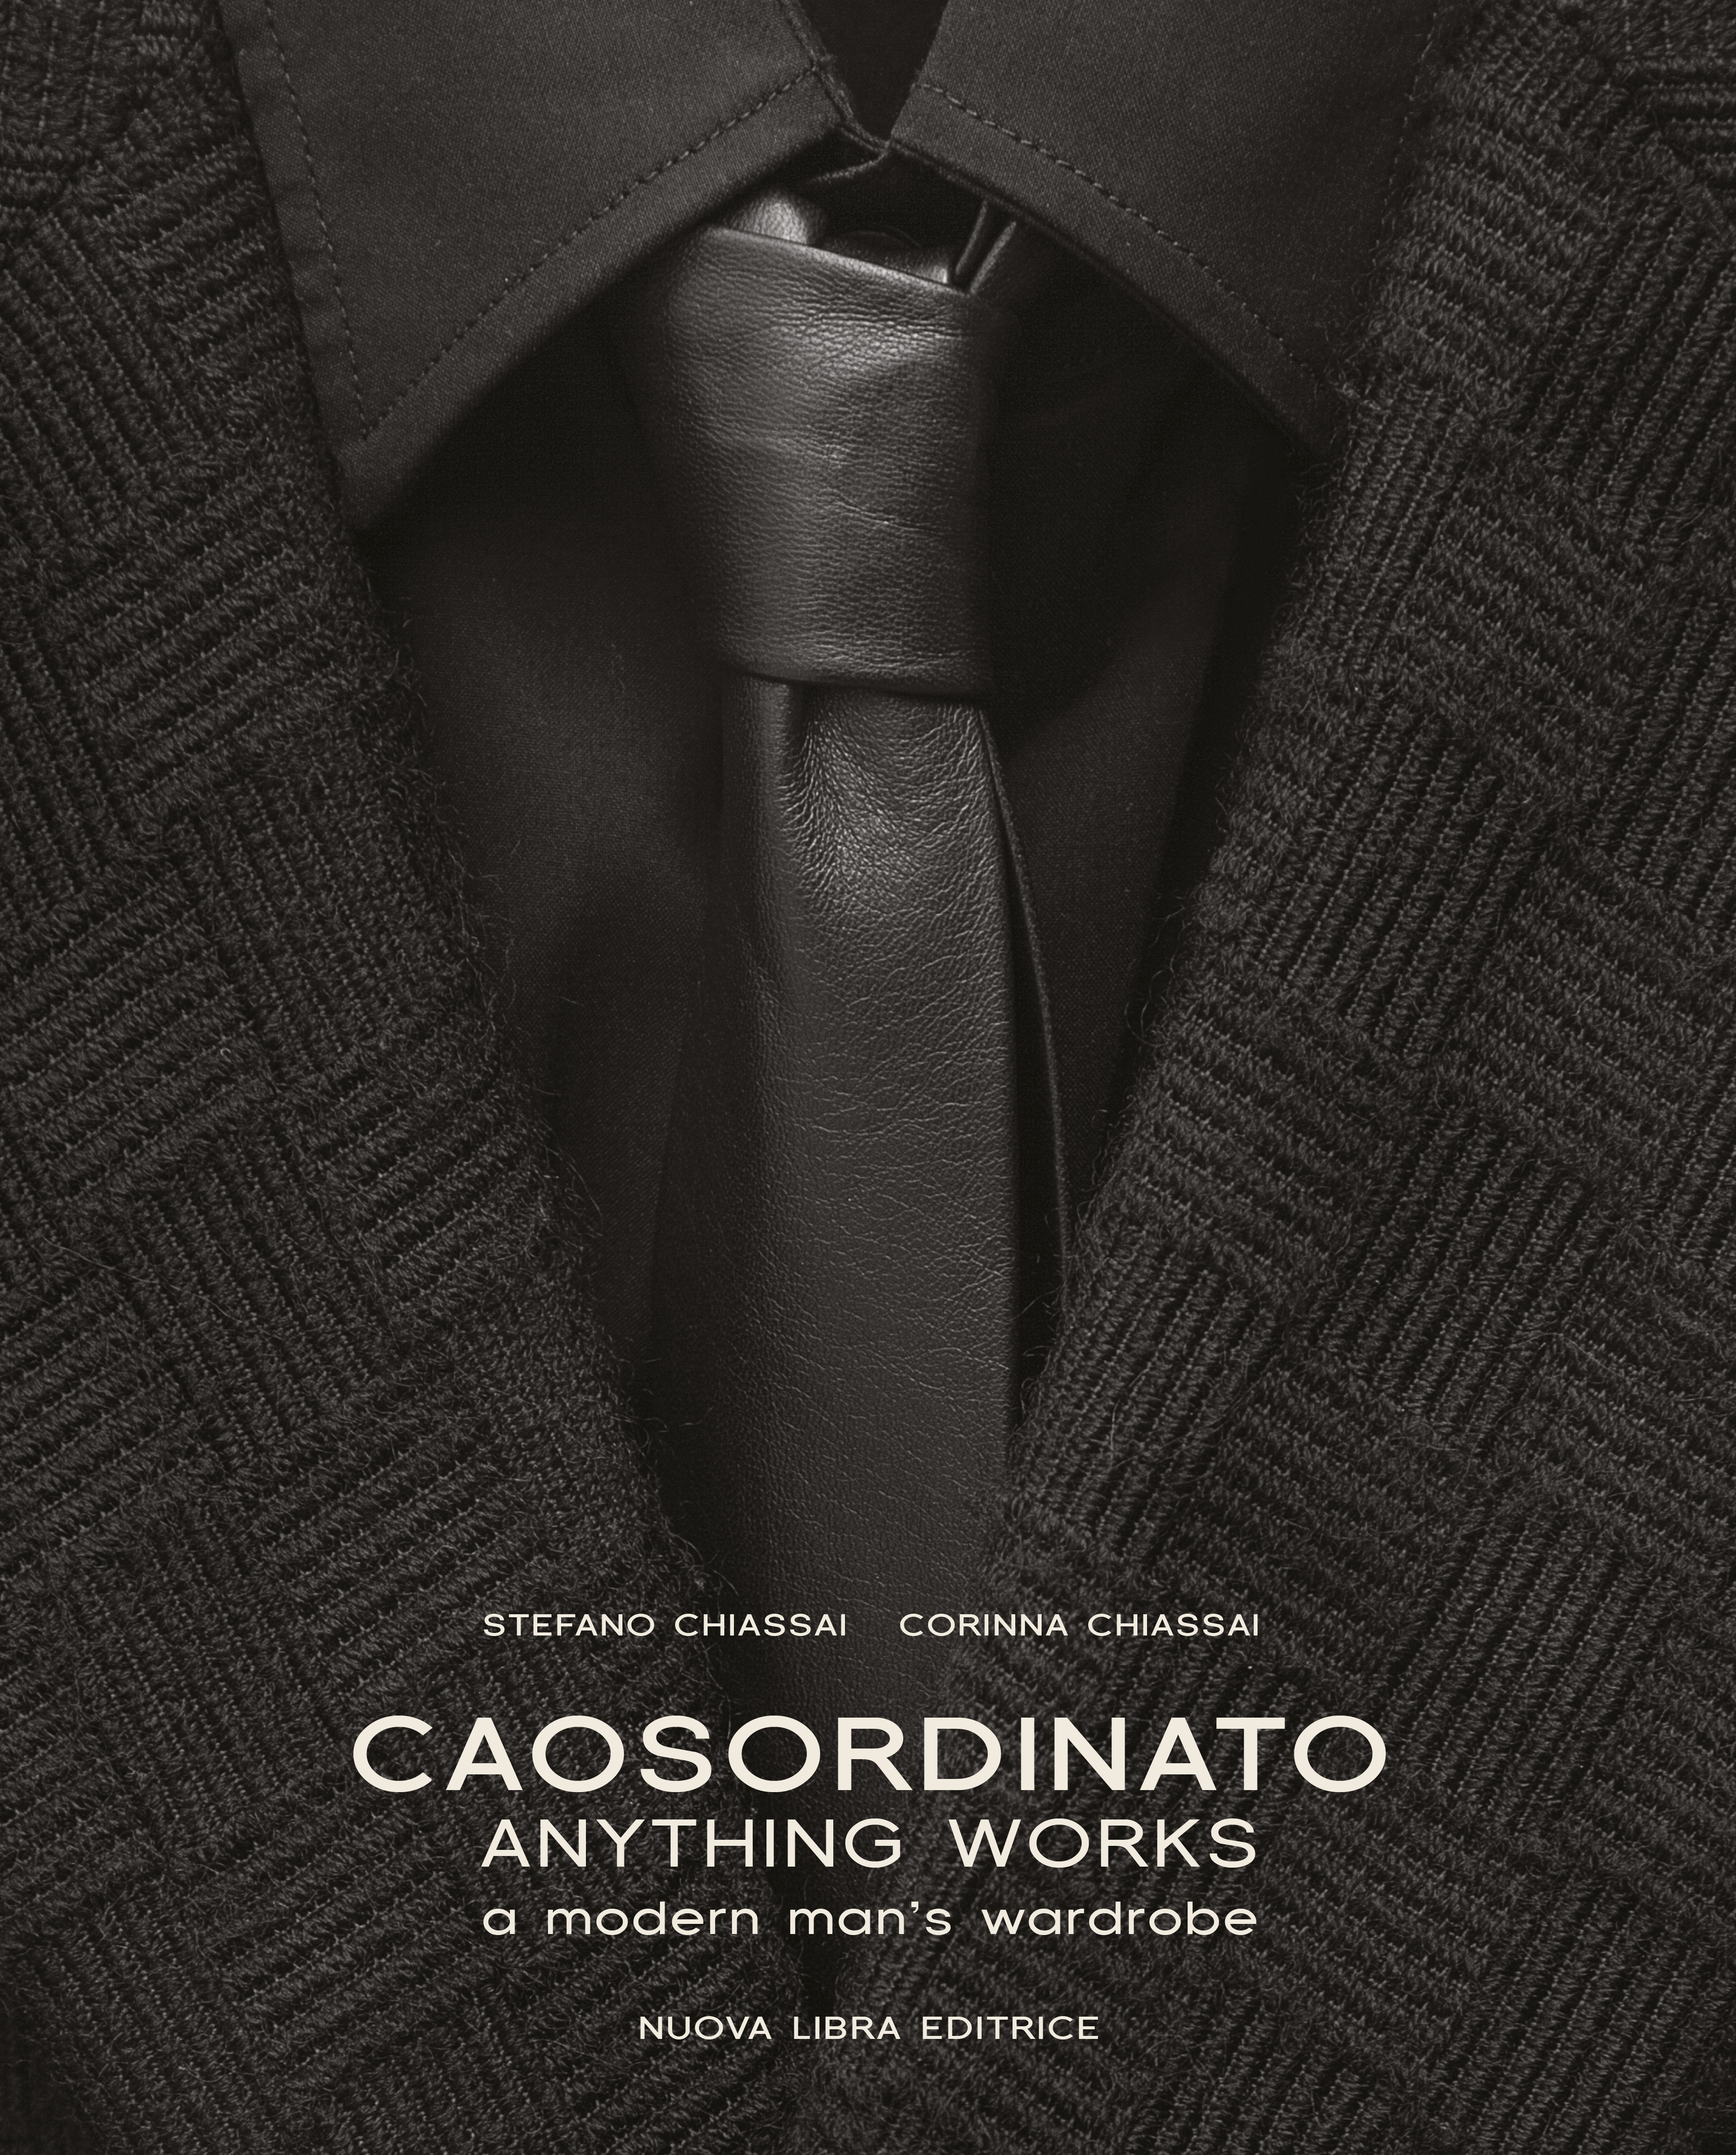 CaosOrdinato - Anything Works. A modern man's wardrobe